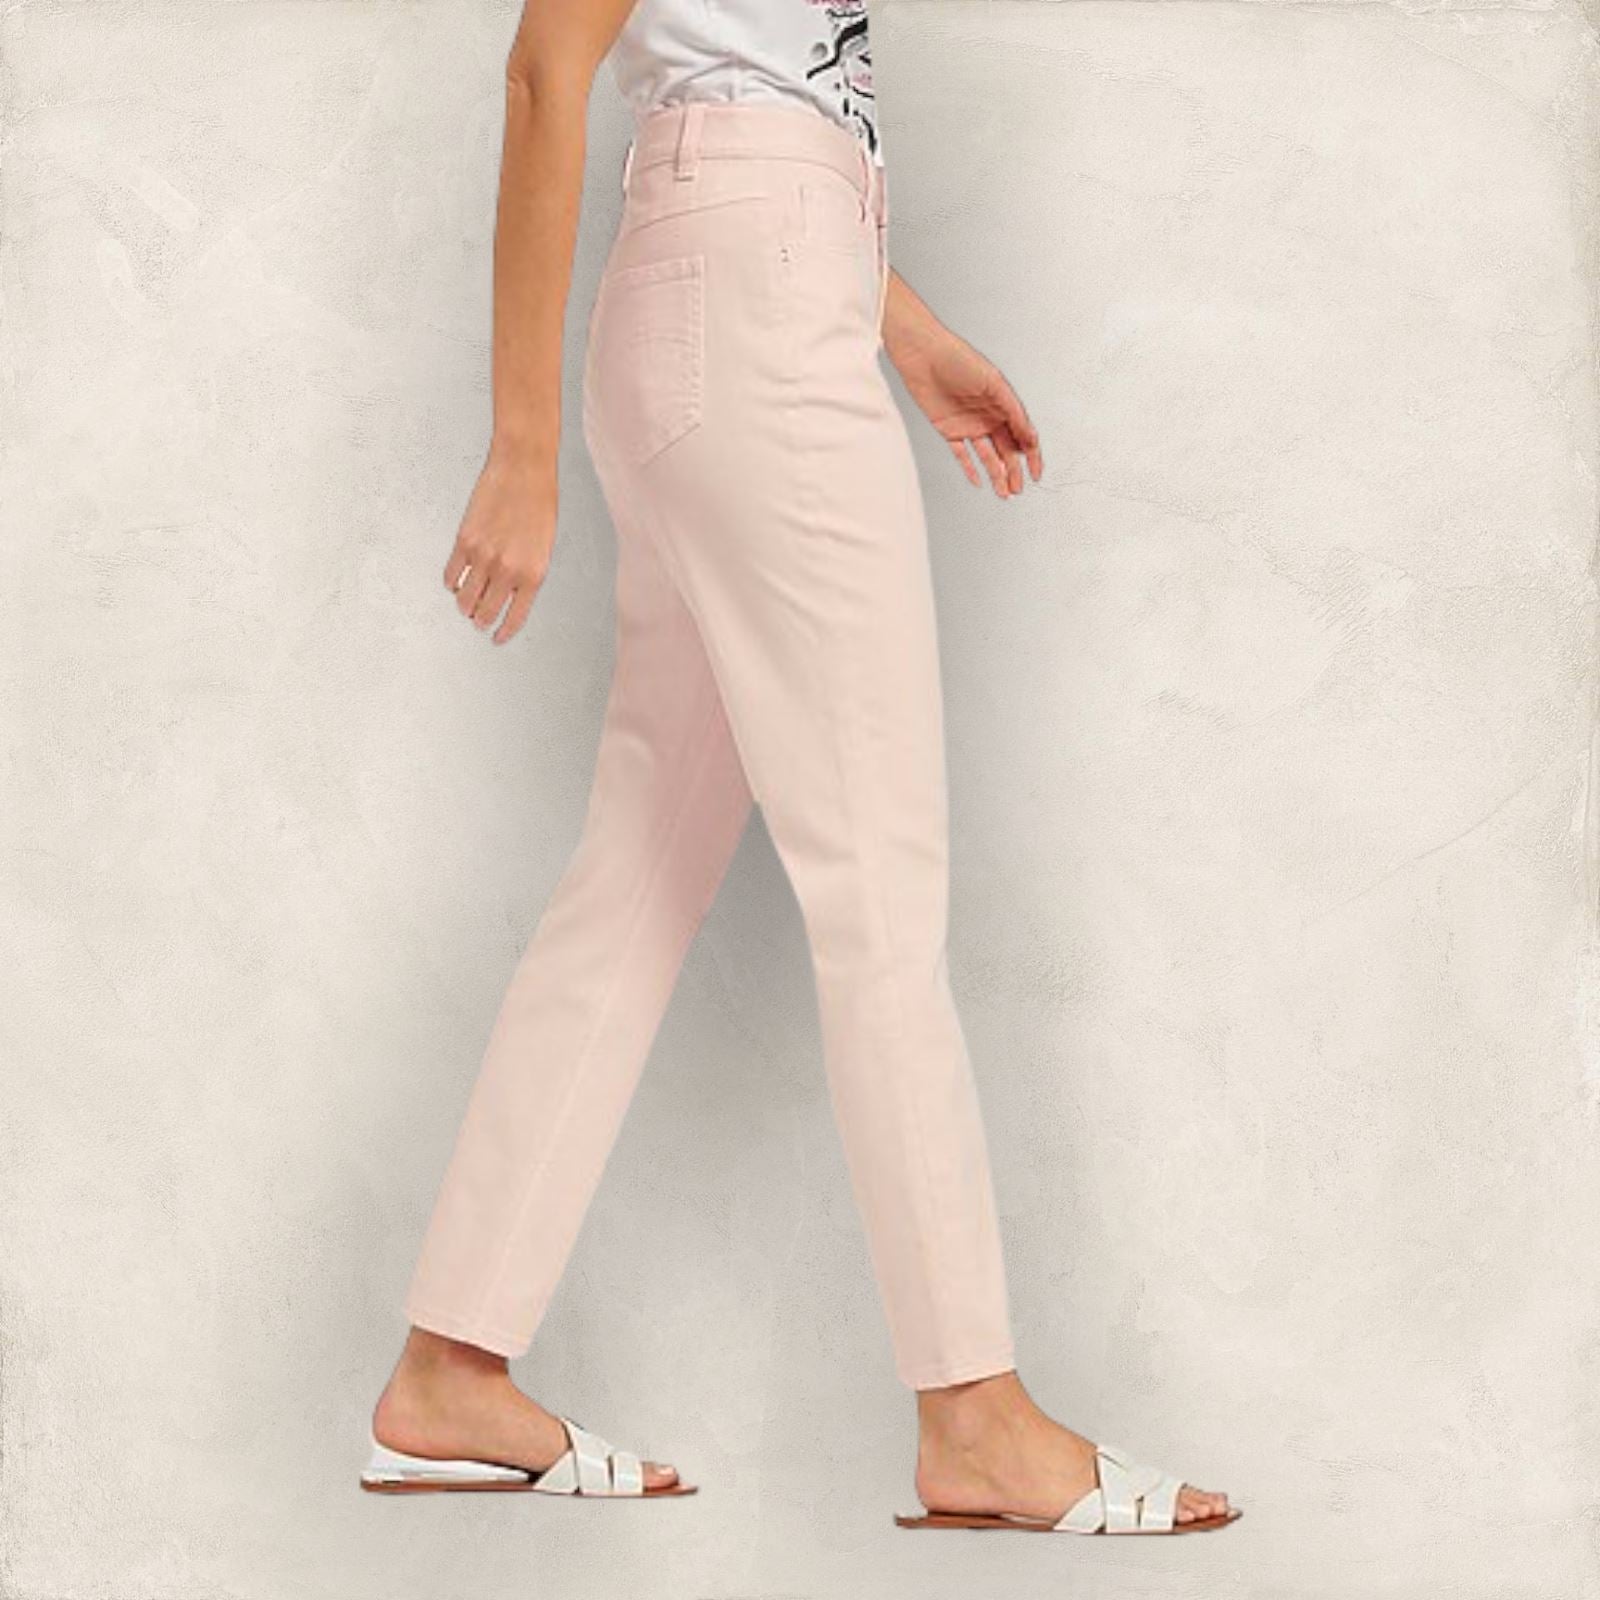 Gerard Darel Women's Pale Pink Slim Leg Ankle Grazer Stretch Jeans UK 16 US 12 EU 44 Timeless Fashions